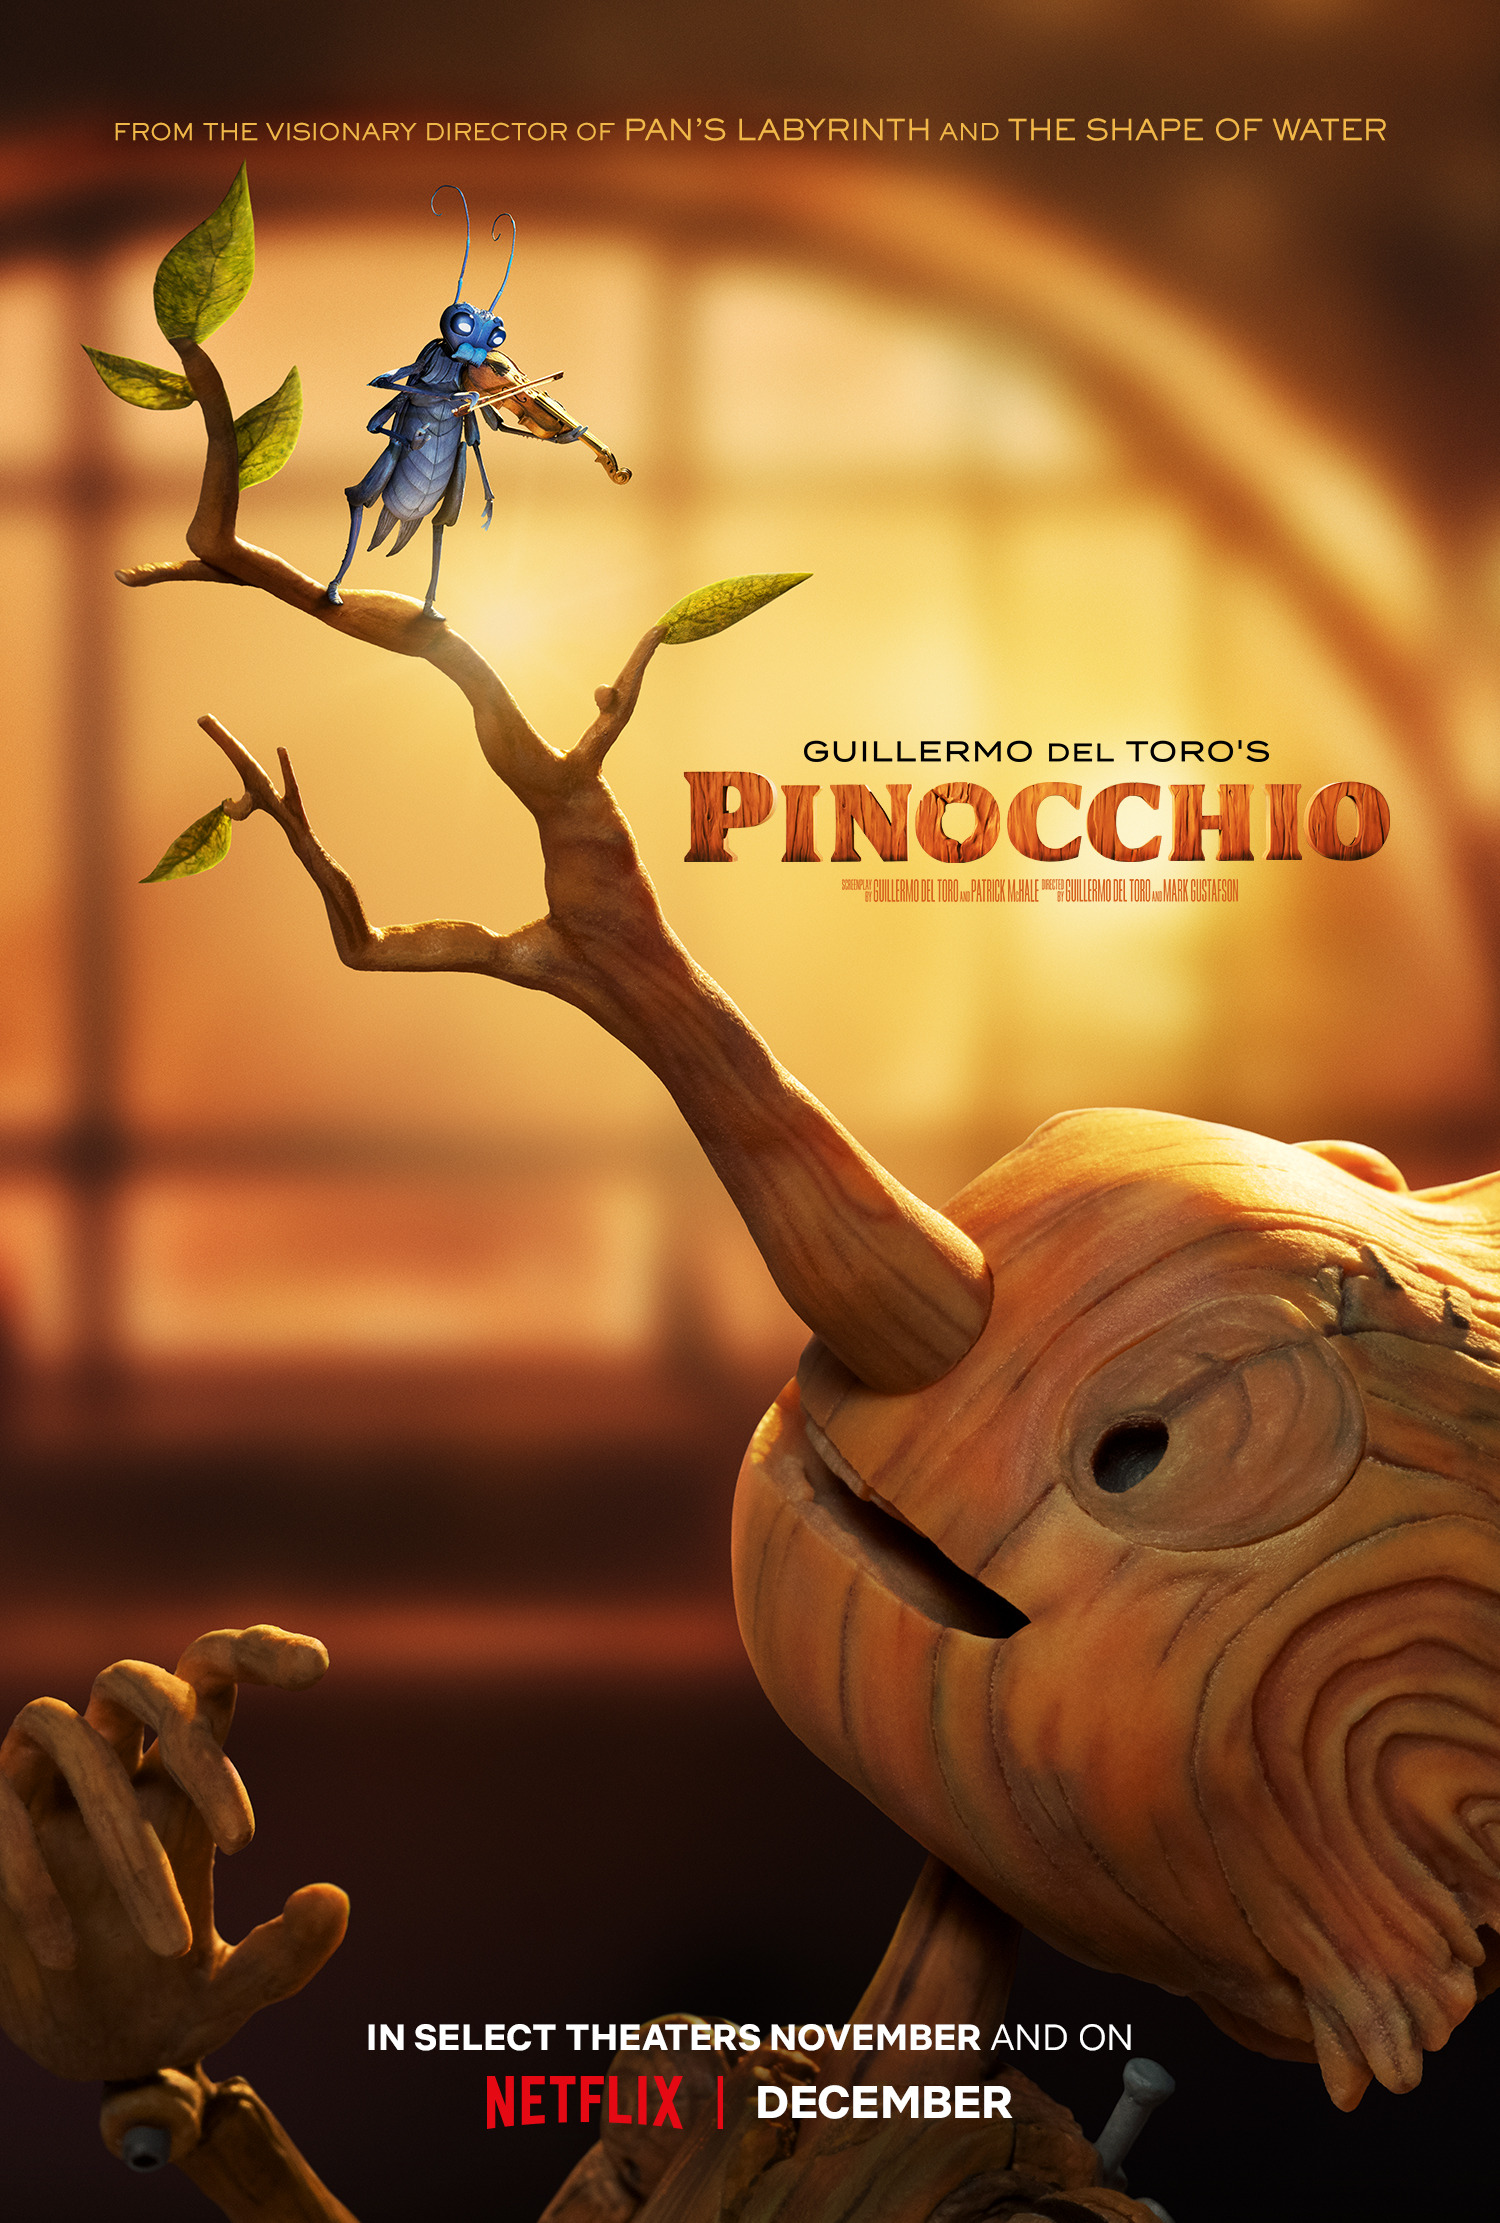 Mega Sized Movie Poster Image for Guillermo del Toro's Pinocchio (#1 of 3)